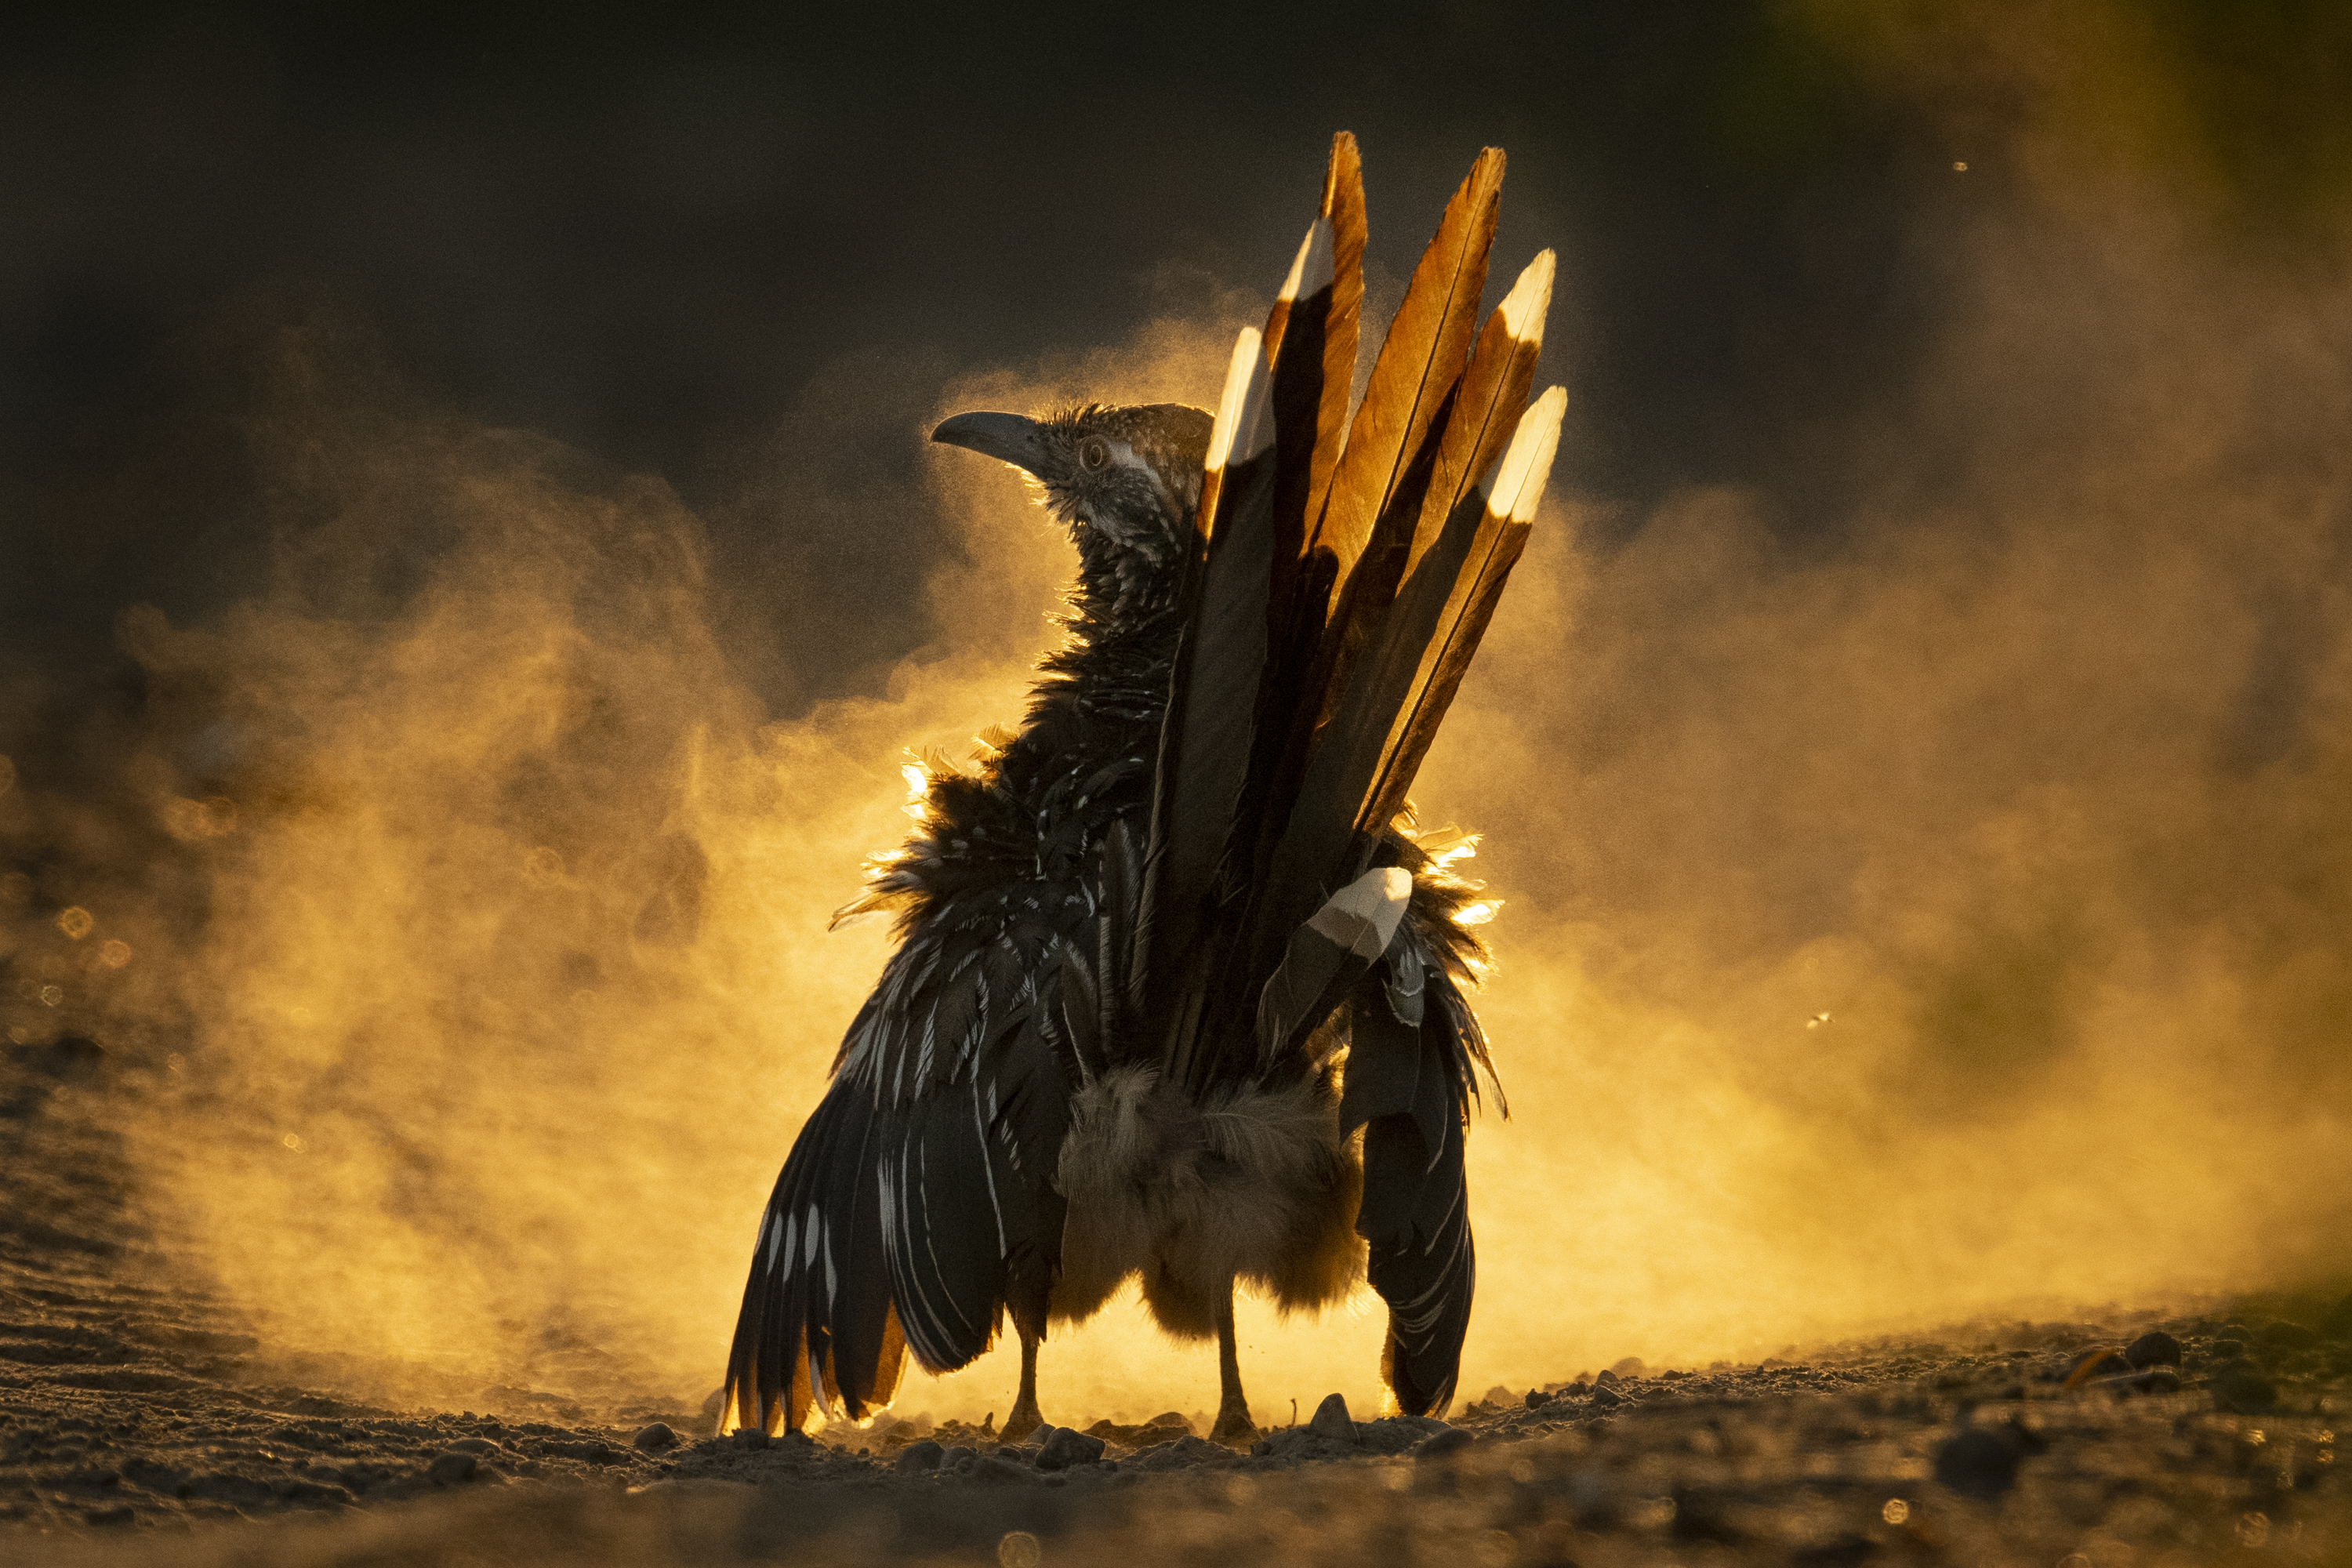 How Carolina Fraser Shoots Her Stunning, Award-Winning Wildlife Photos